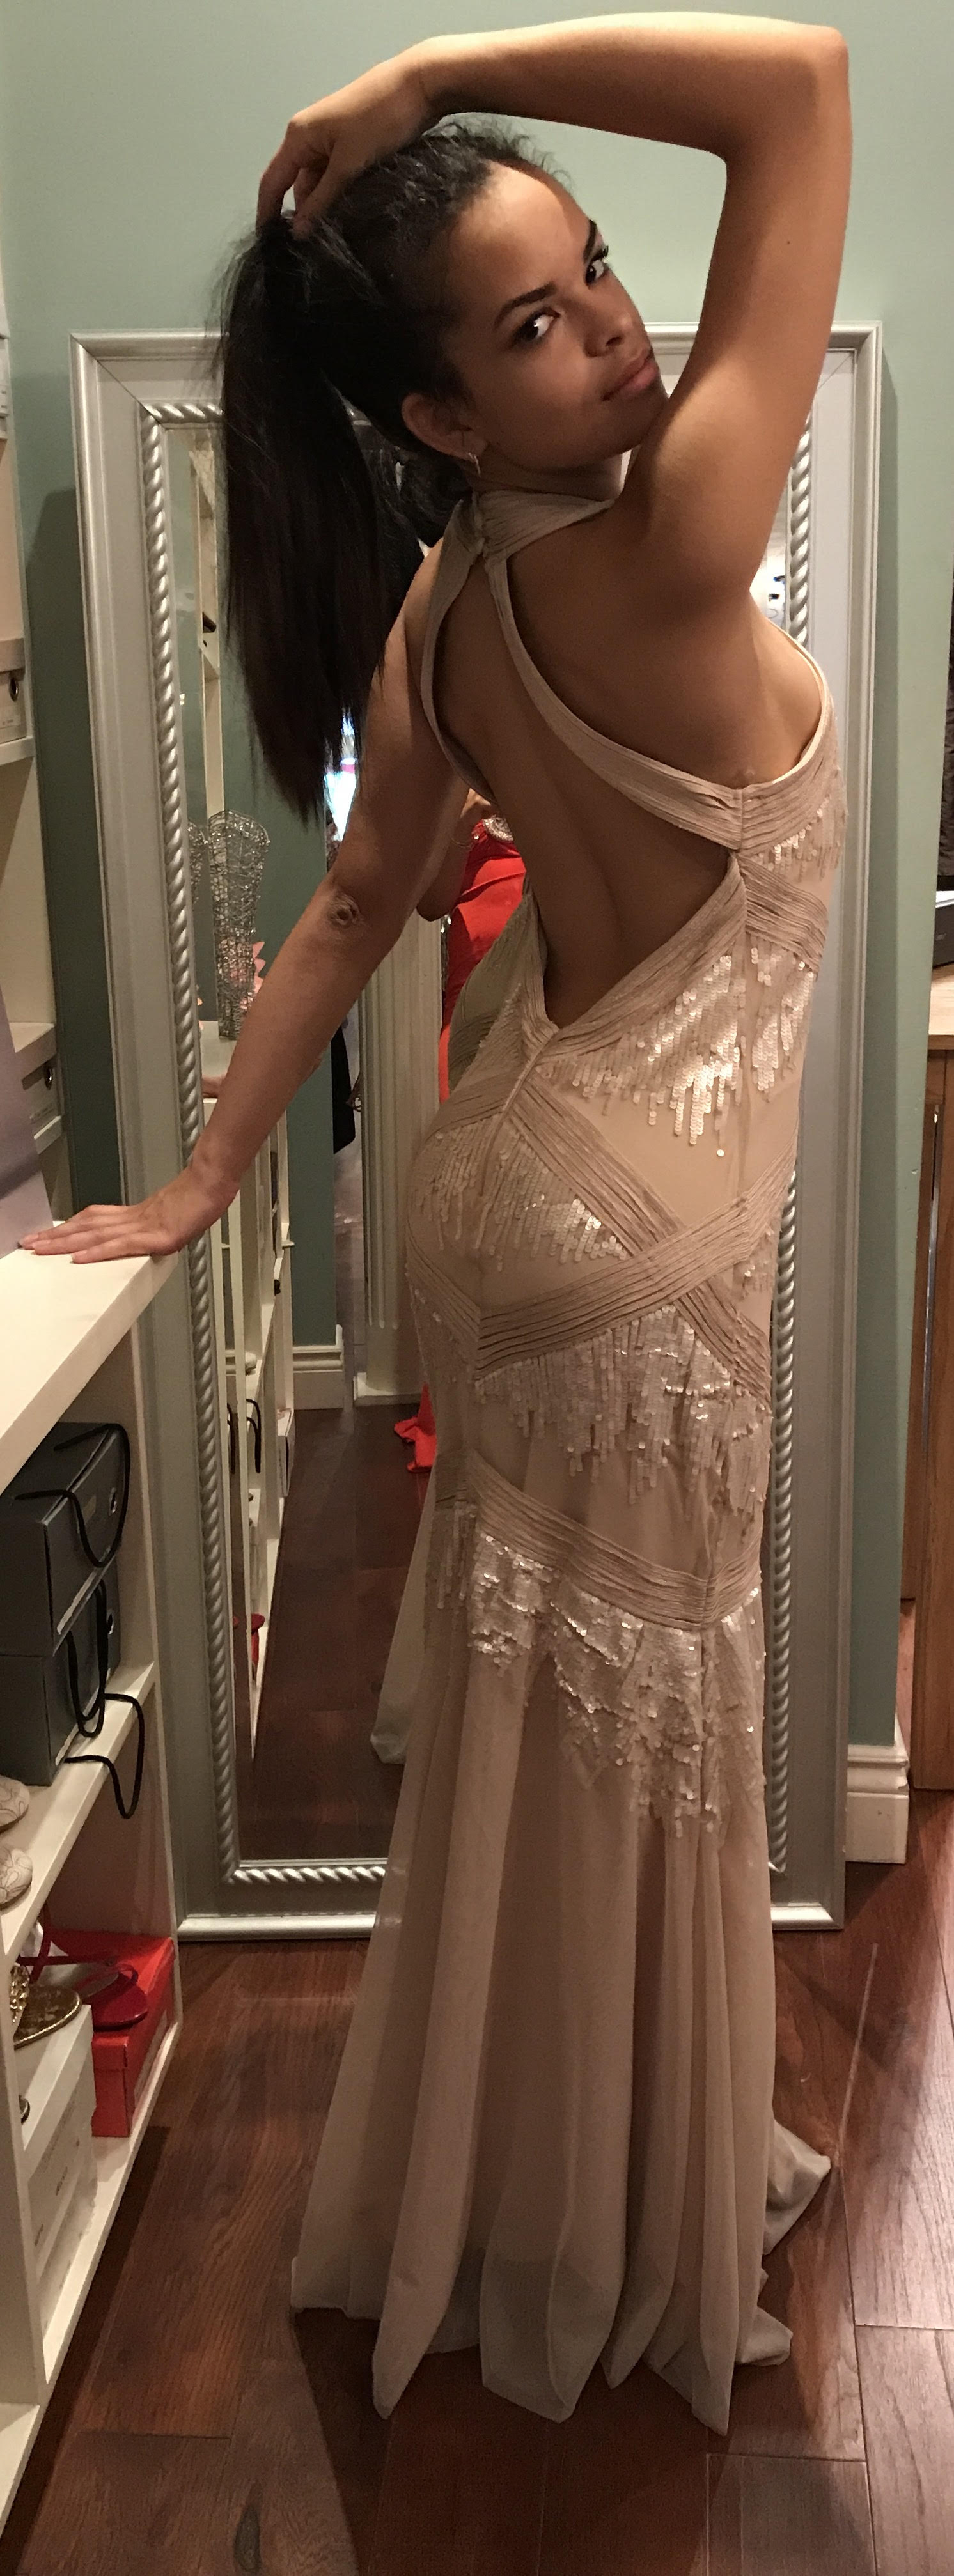 nude body gown at dress shop in Burlington Ontario